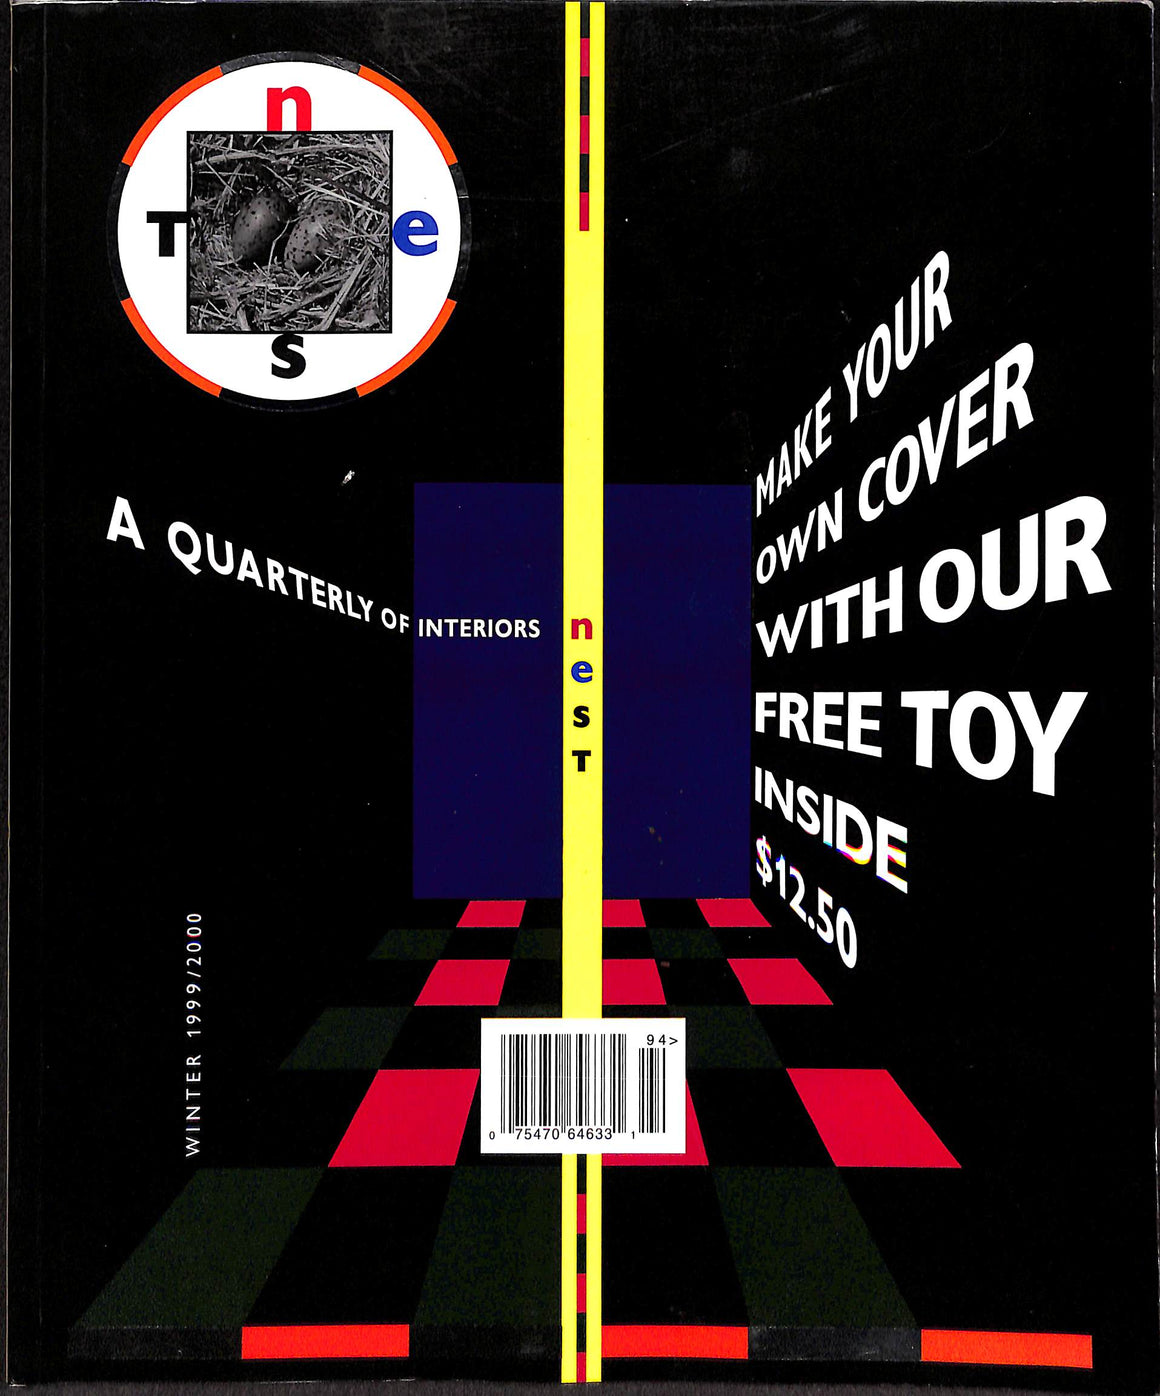 Nest A Quarterly Magazine Of Interiors Winter 1999/ 2000 #7